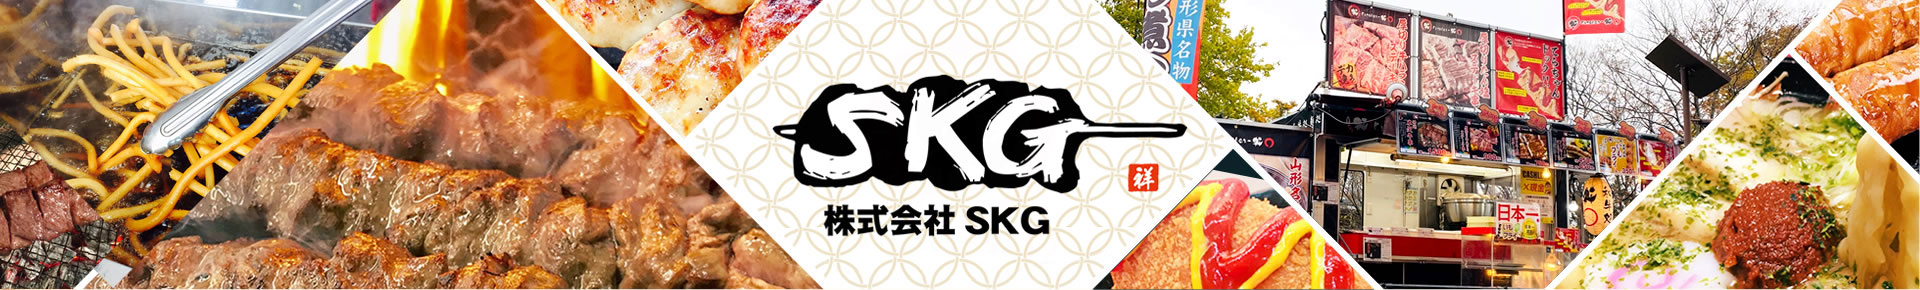 株式会社SKG